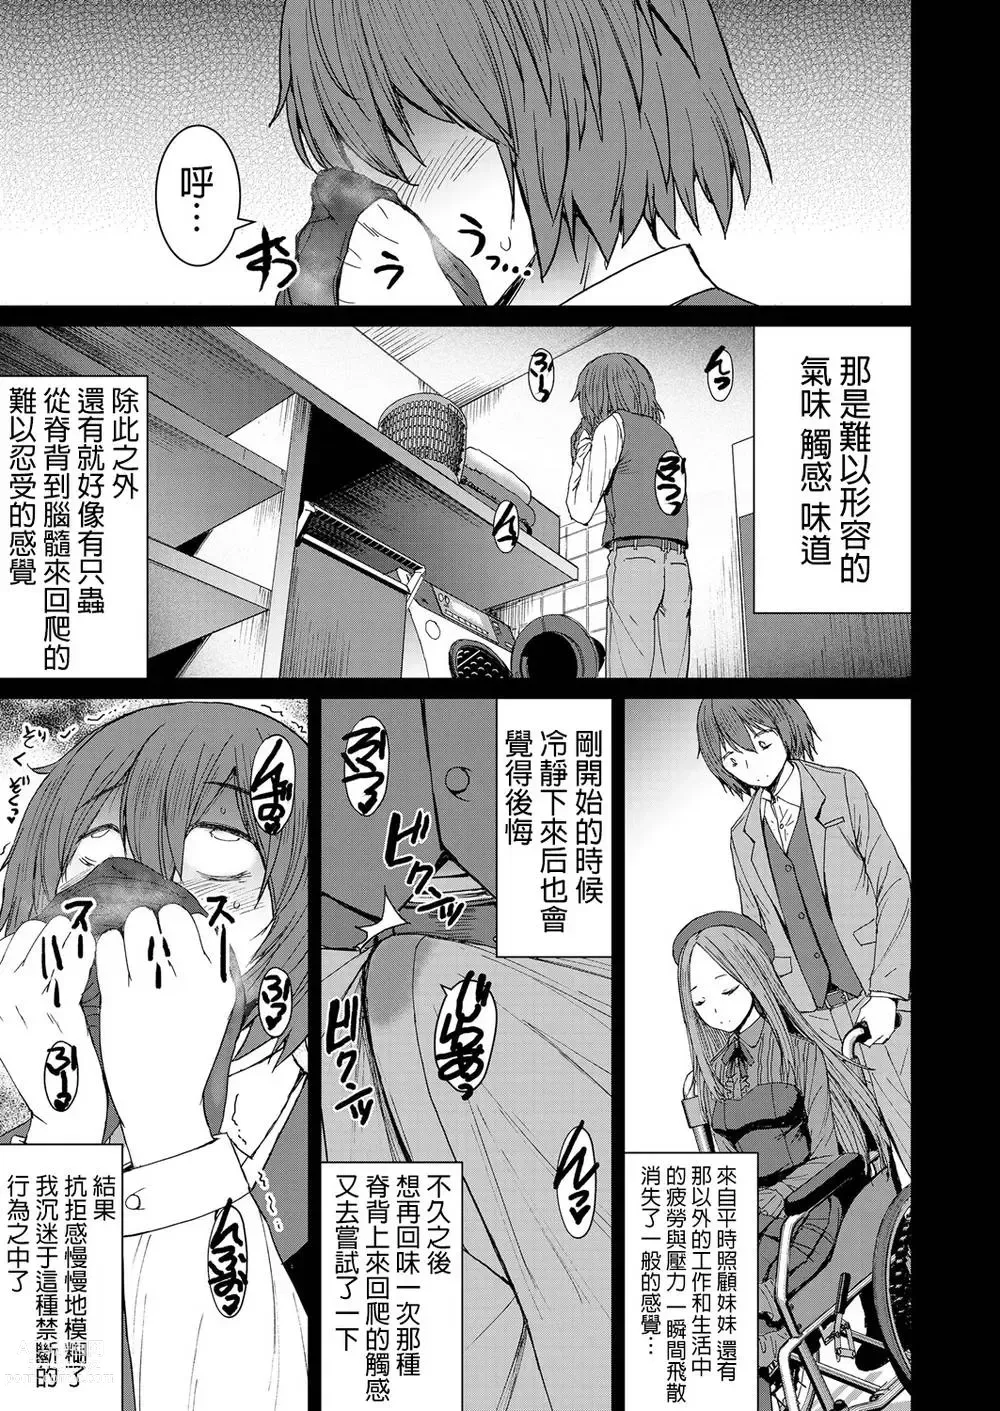 Page 9 of manga Aisarete Miru?